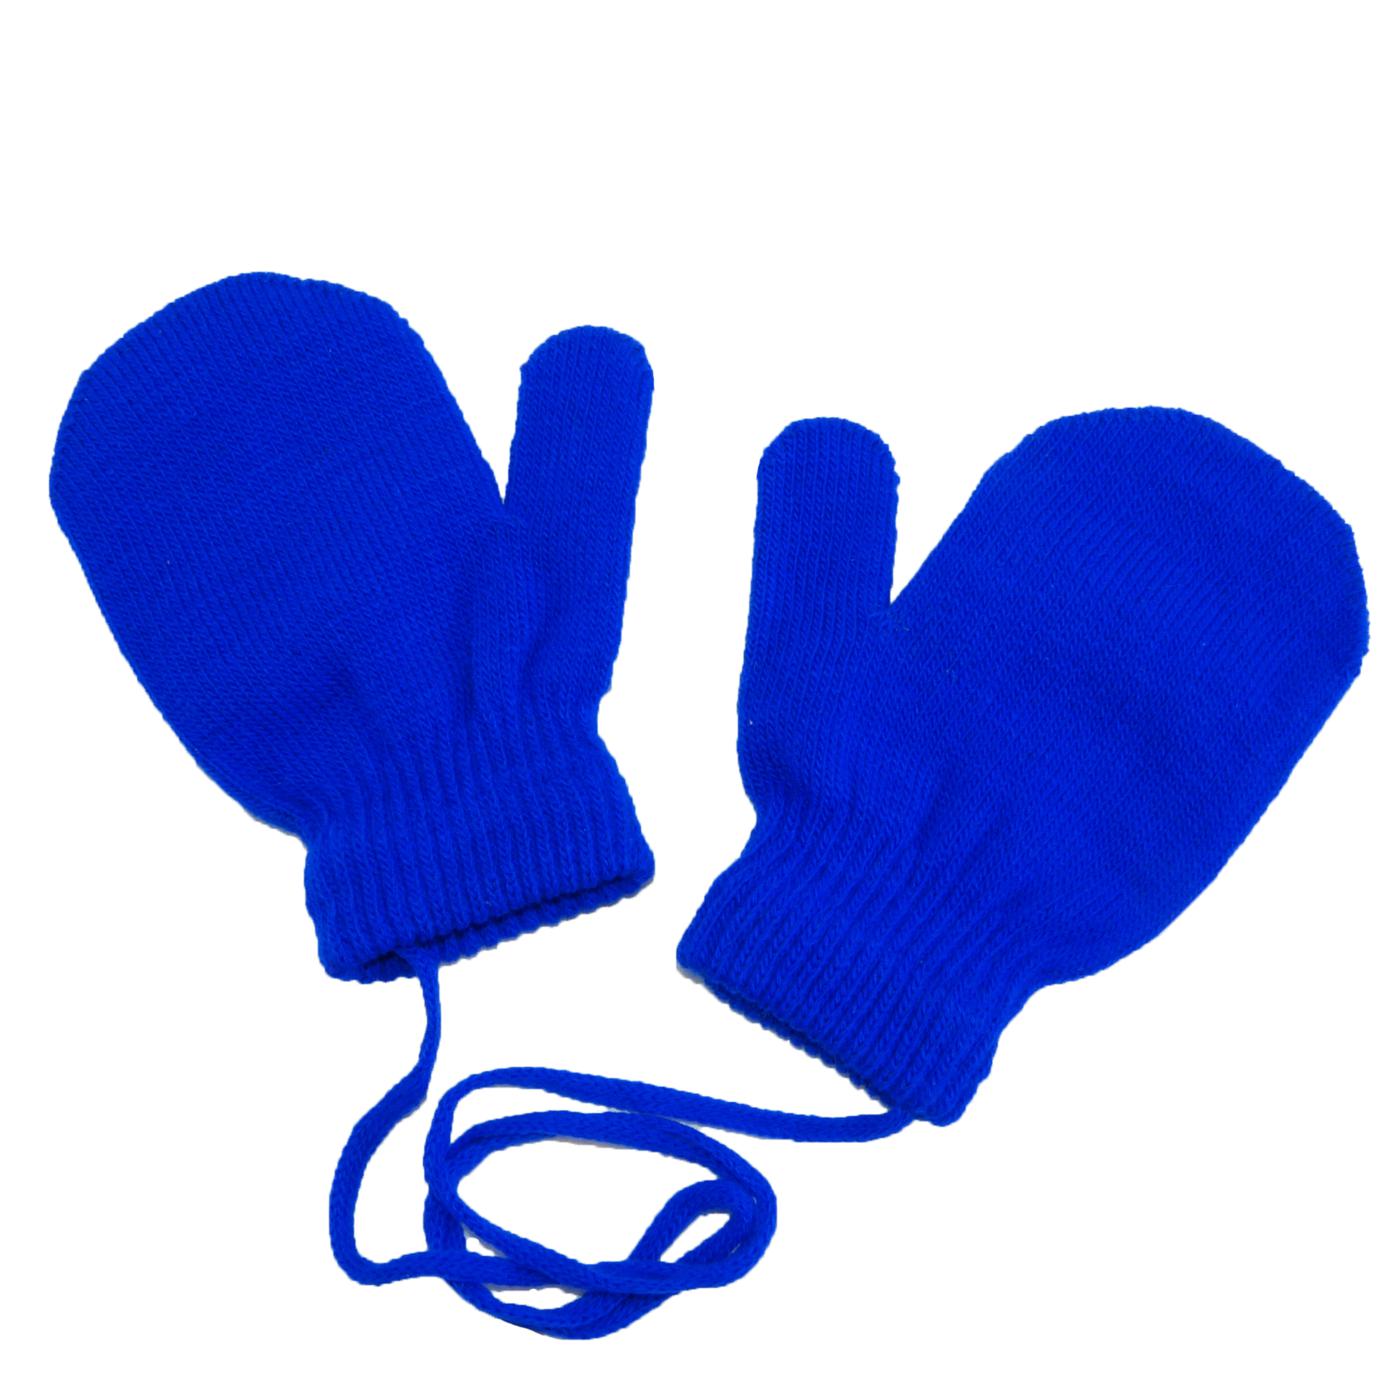 winter gloves clipart - photo #15